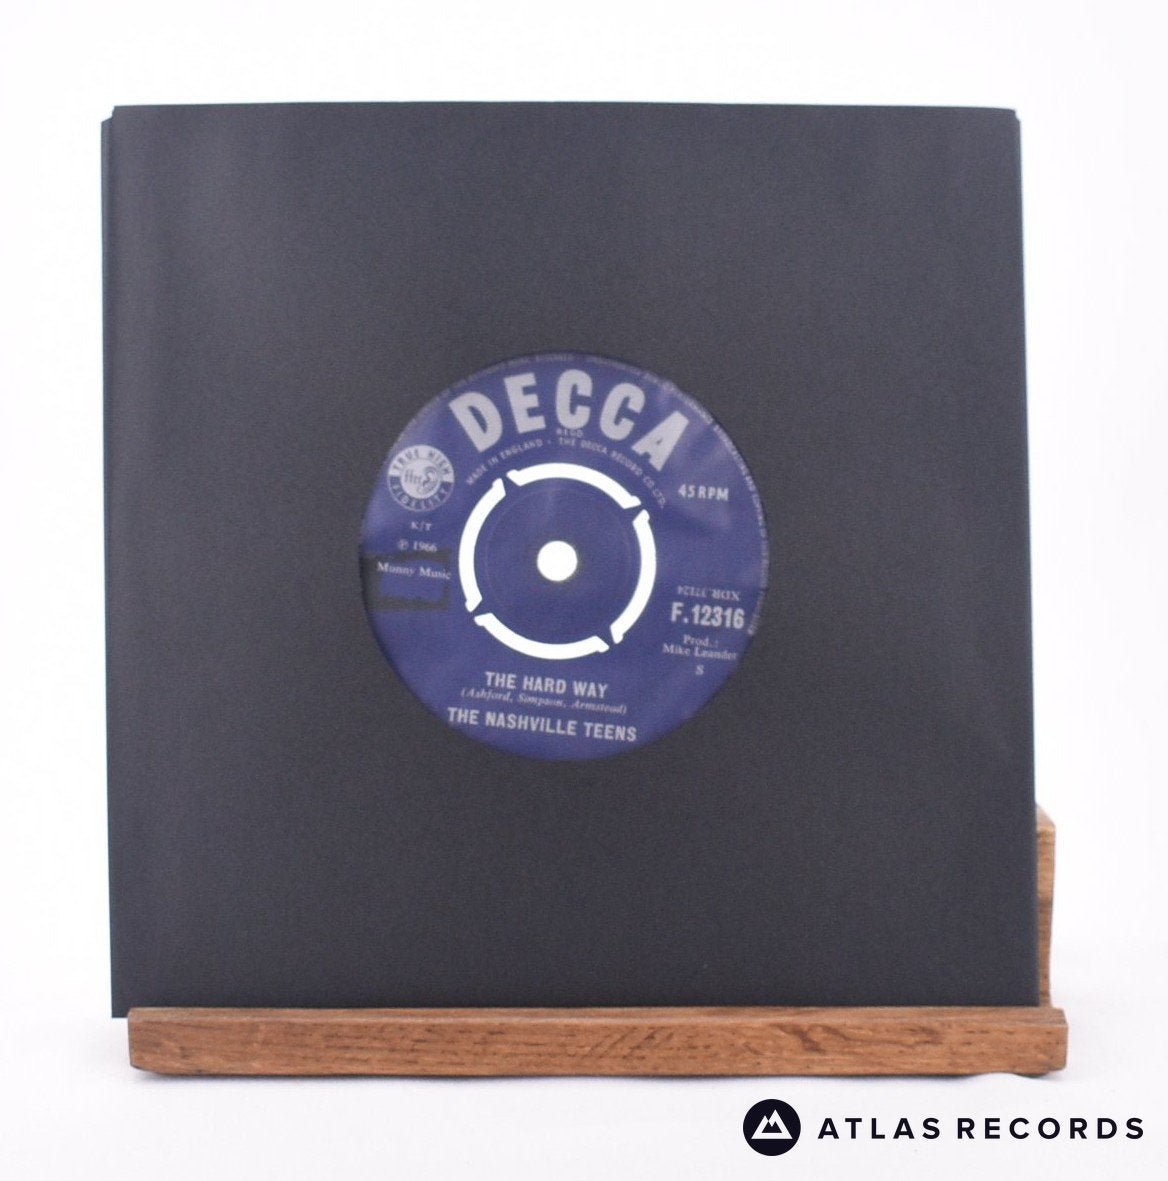 The Nashville Teens The Hard Way 7" Vinyl Record - In Sleeve